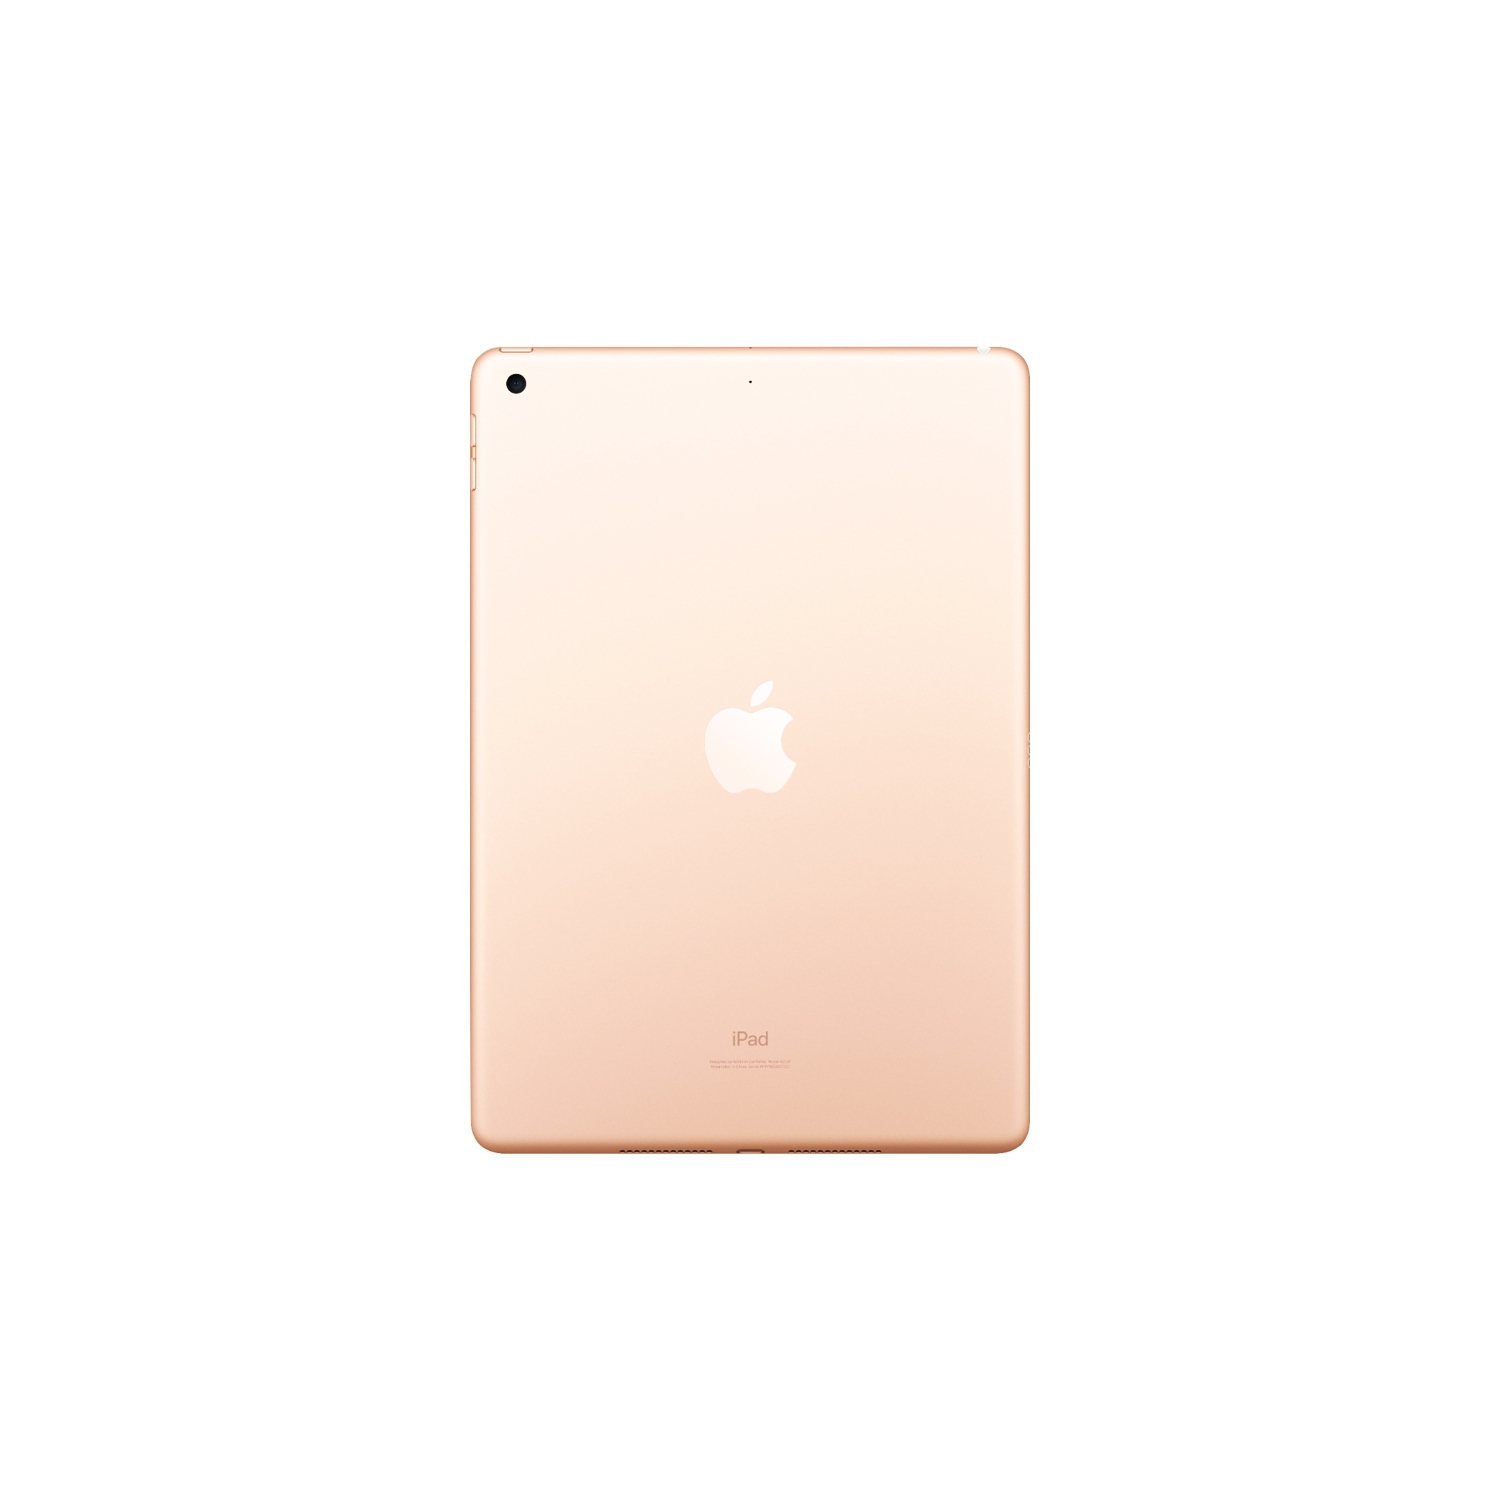 Apple iPad 7 (10.2-inch, Wi-Fi, 128GB) - Space Gray | Best Buy Canada